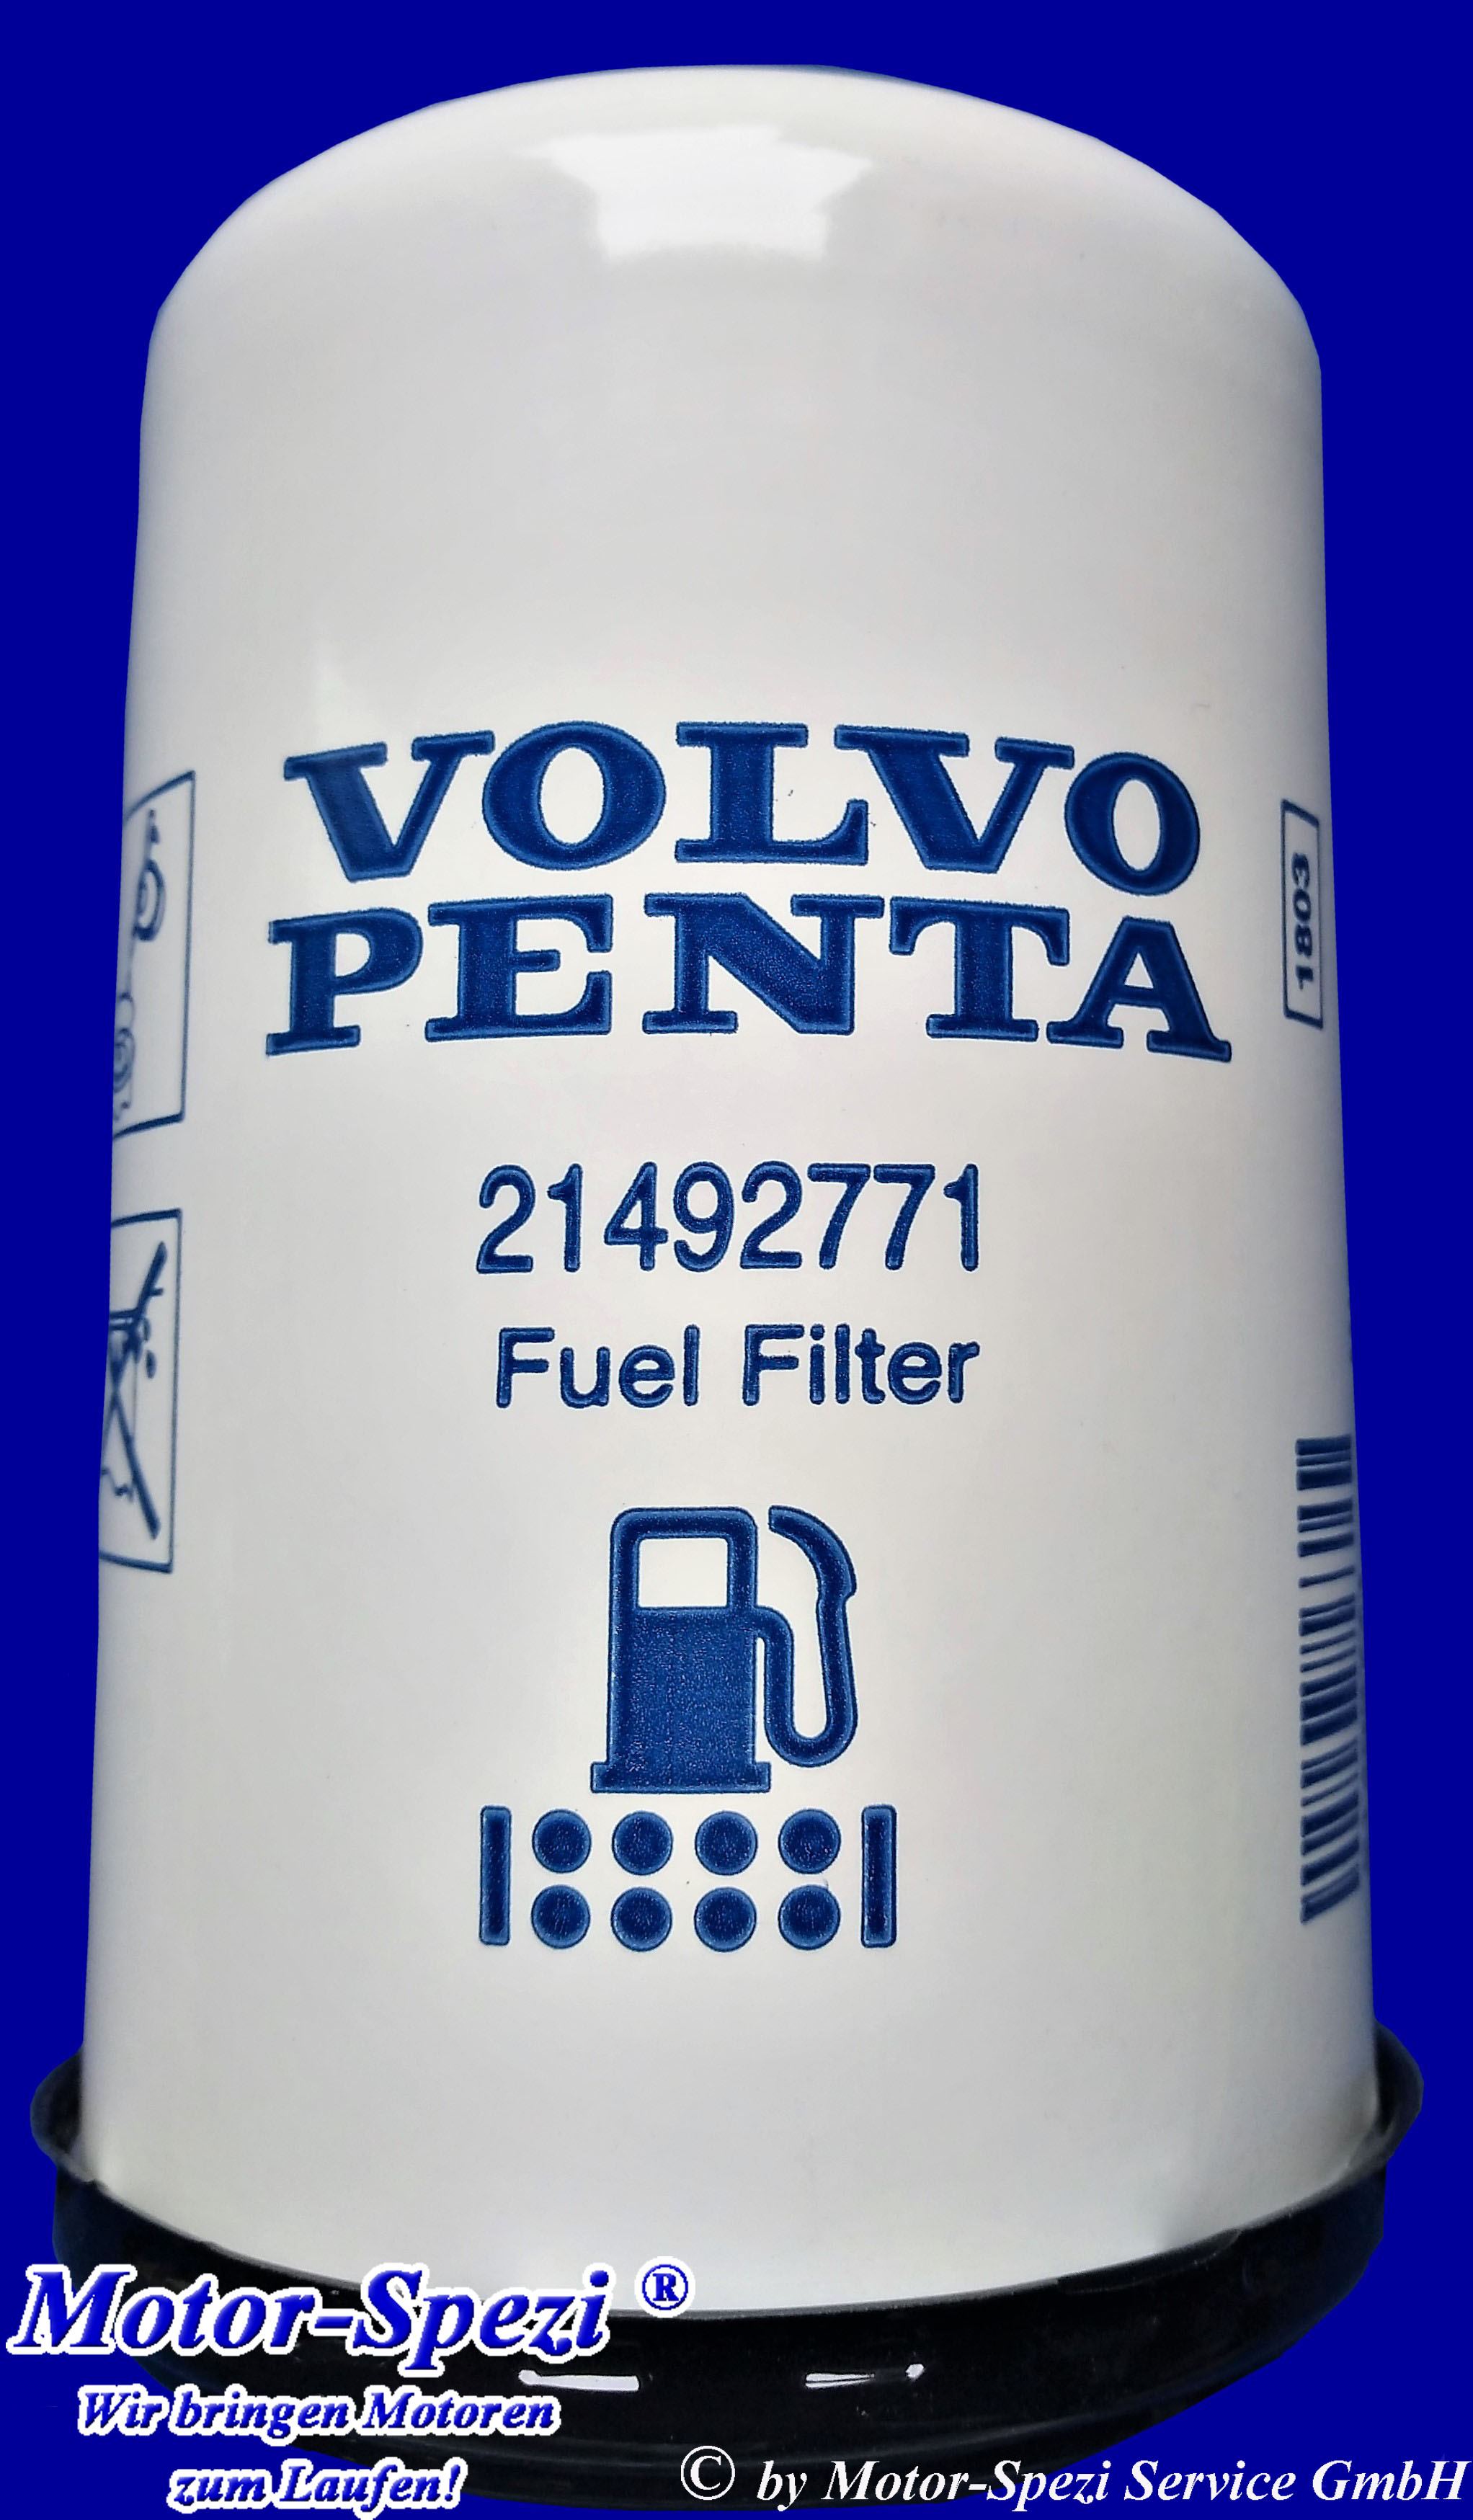 Motor-Spezi - Volvo Penta Kraftstofffilter, passt MD30, TMD30, TAMD30 und  AQAD30. Original Volvo Penta 21492771 ersetzt 3825133.